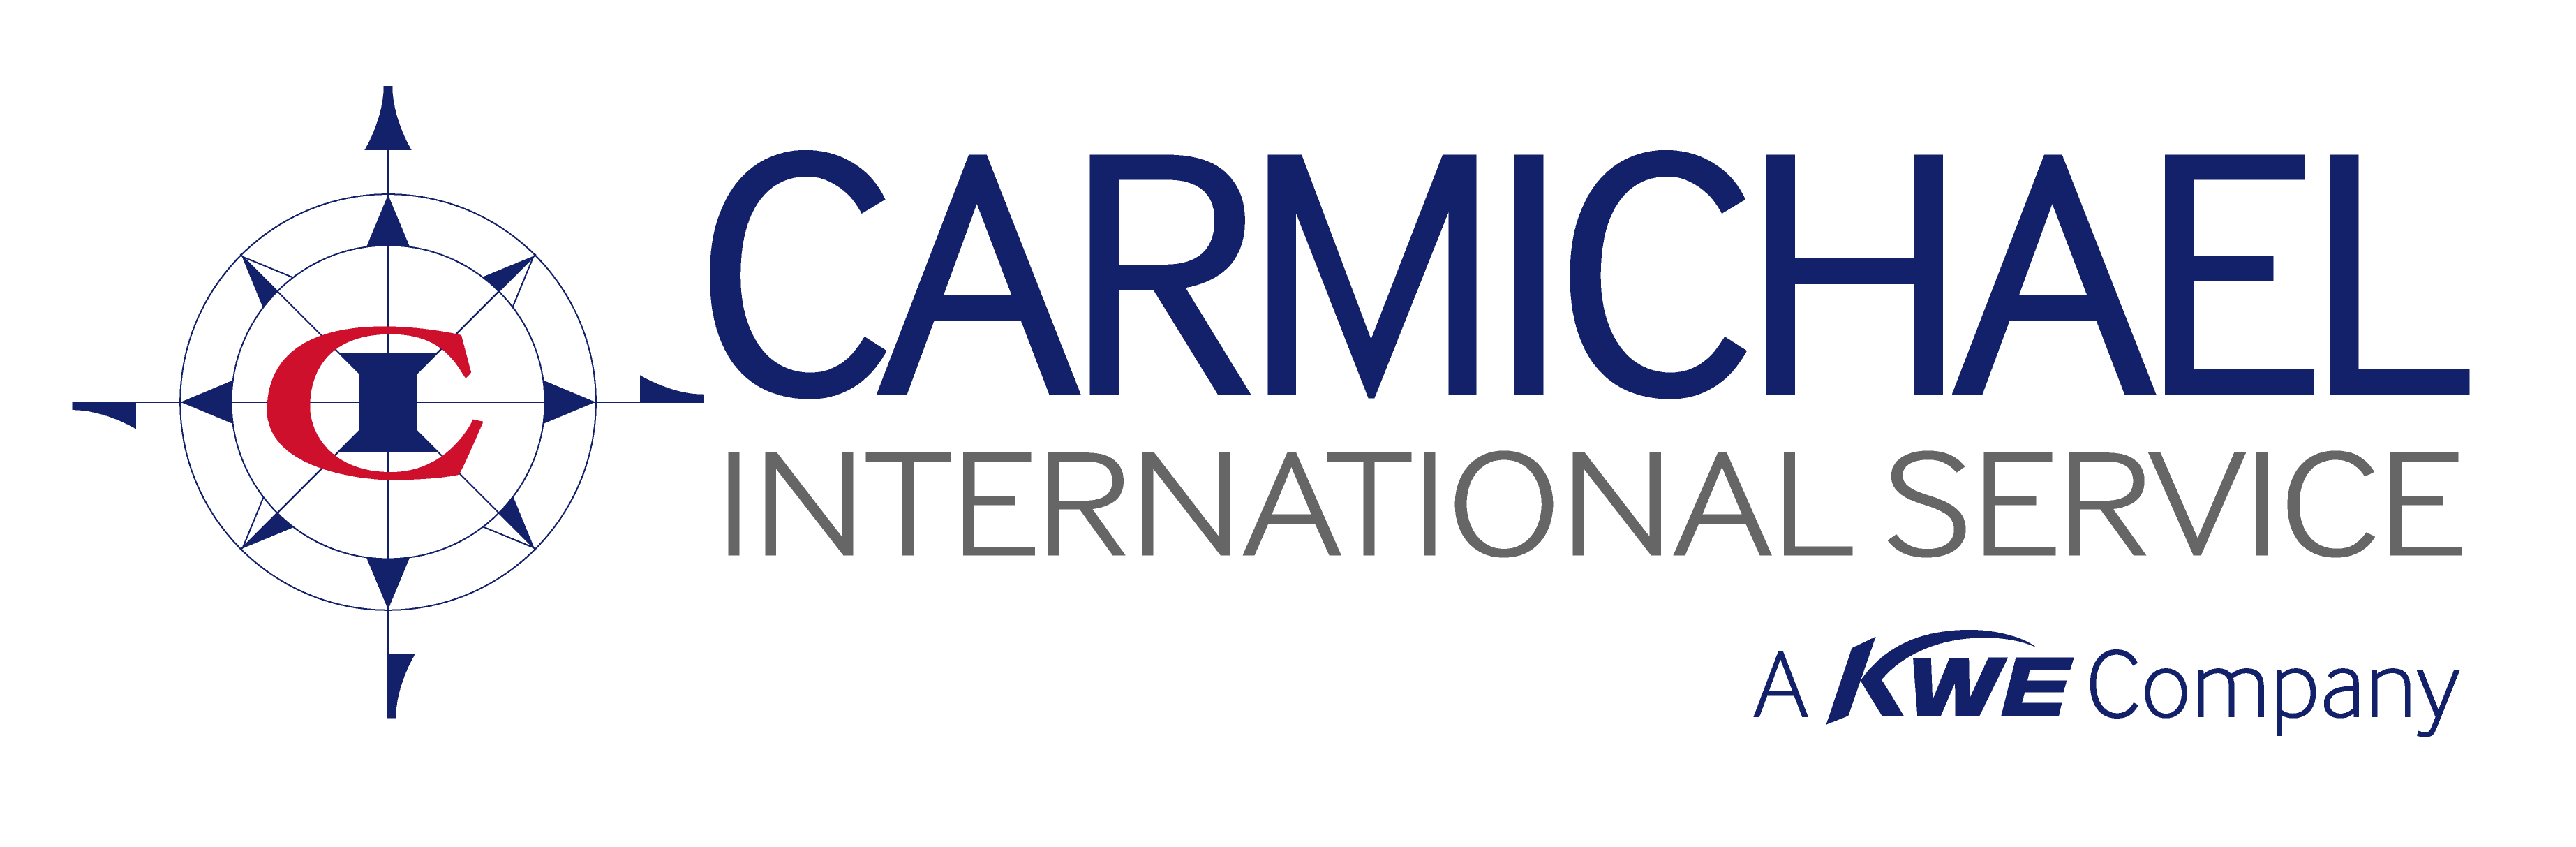 Carmichael International